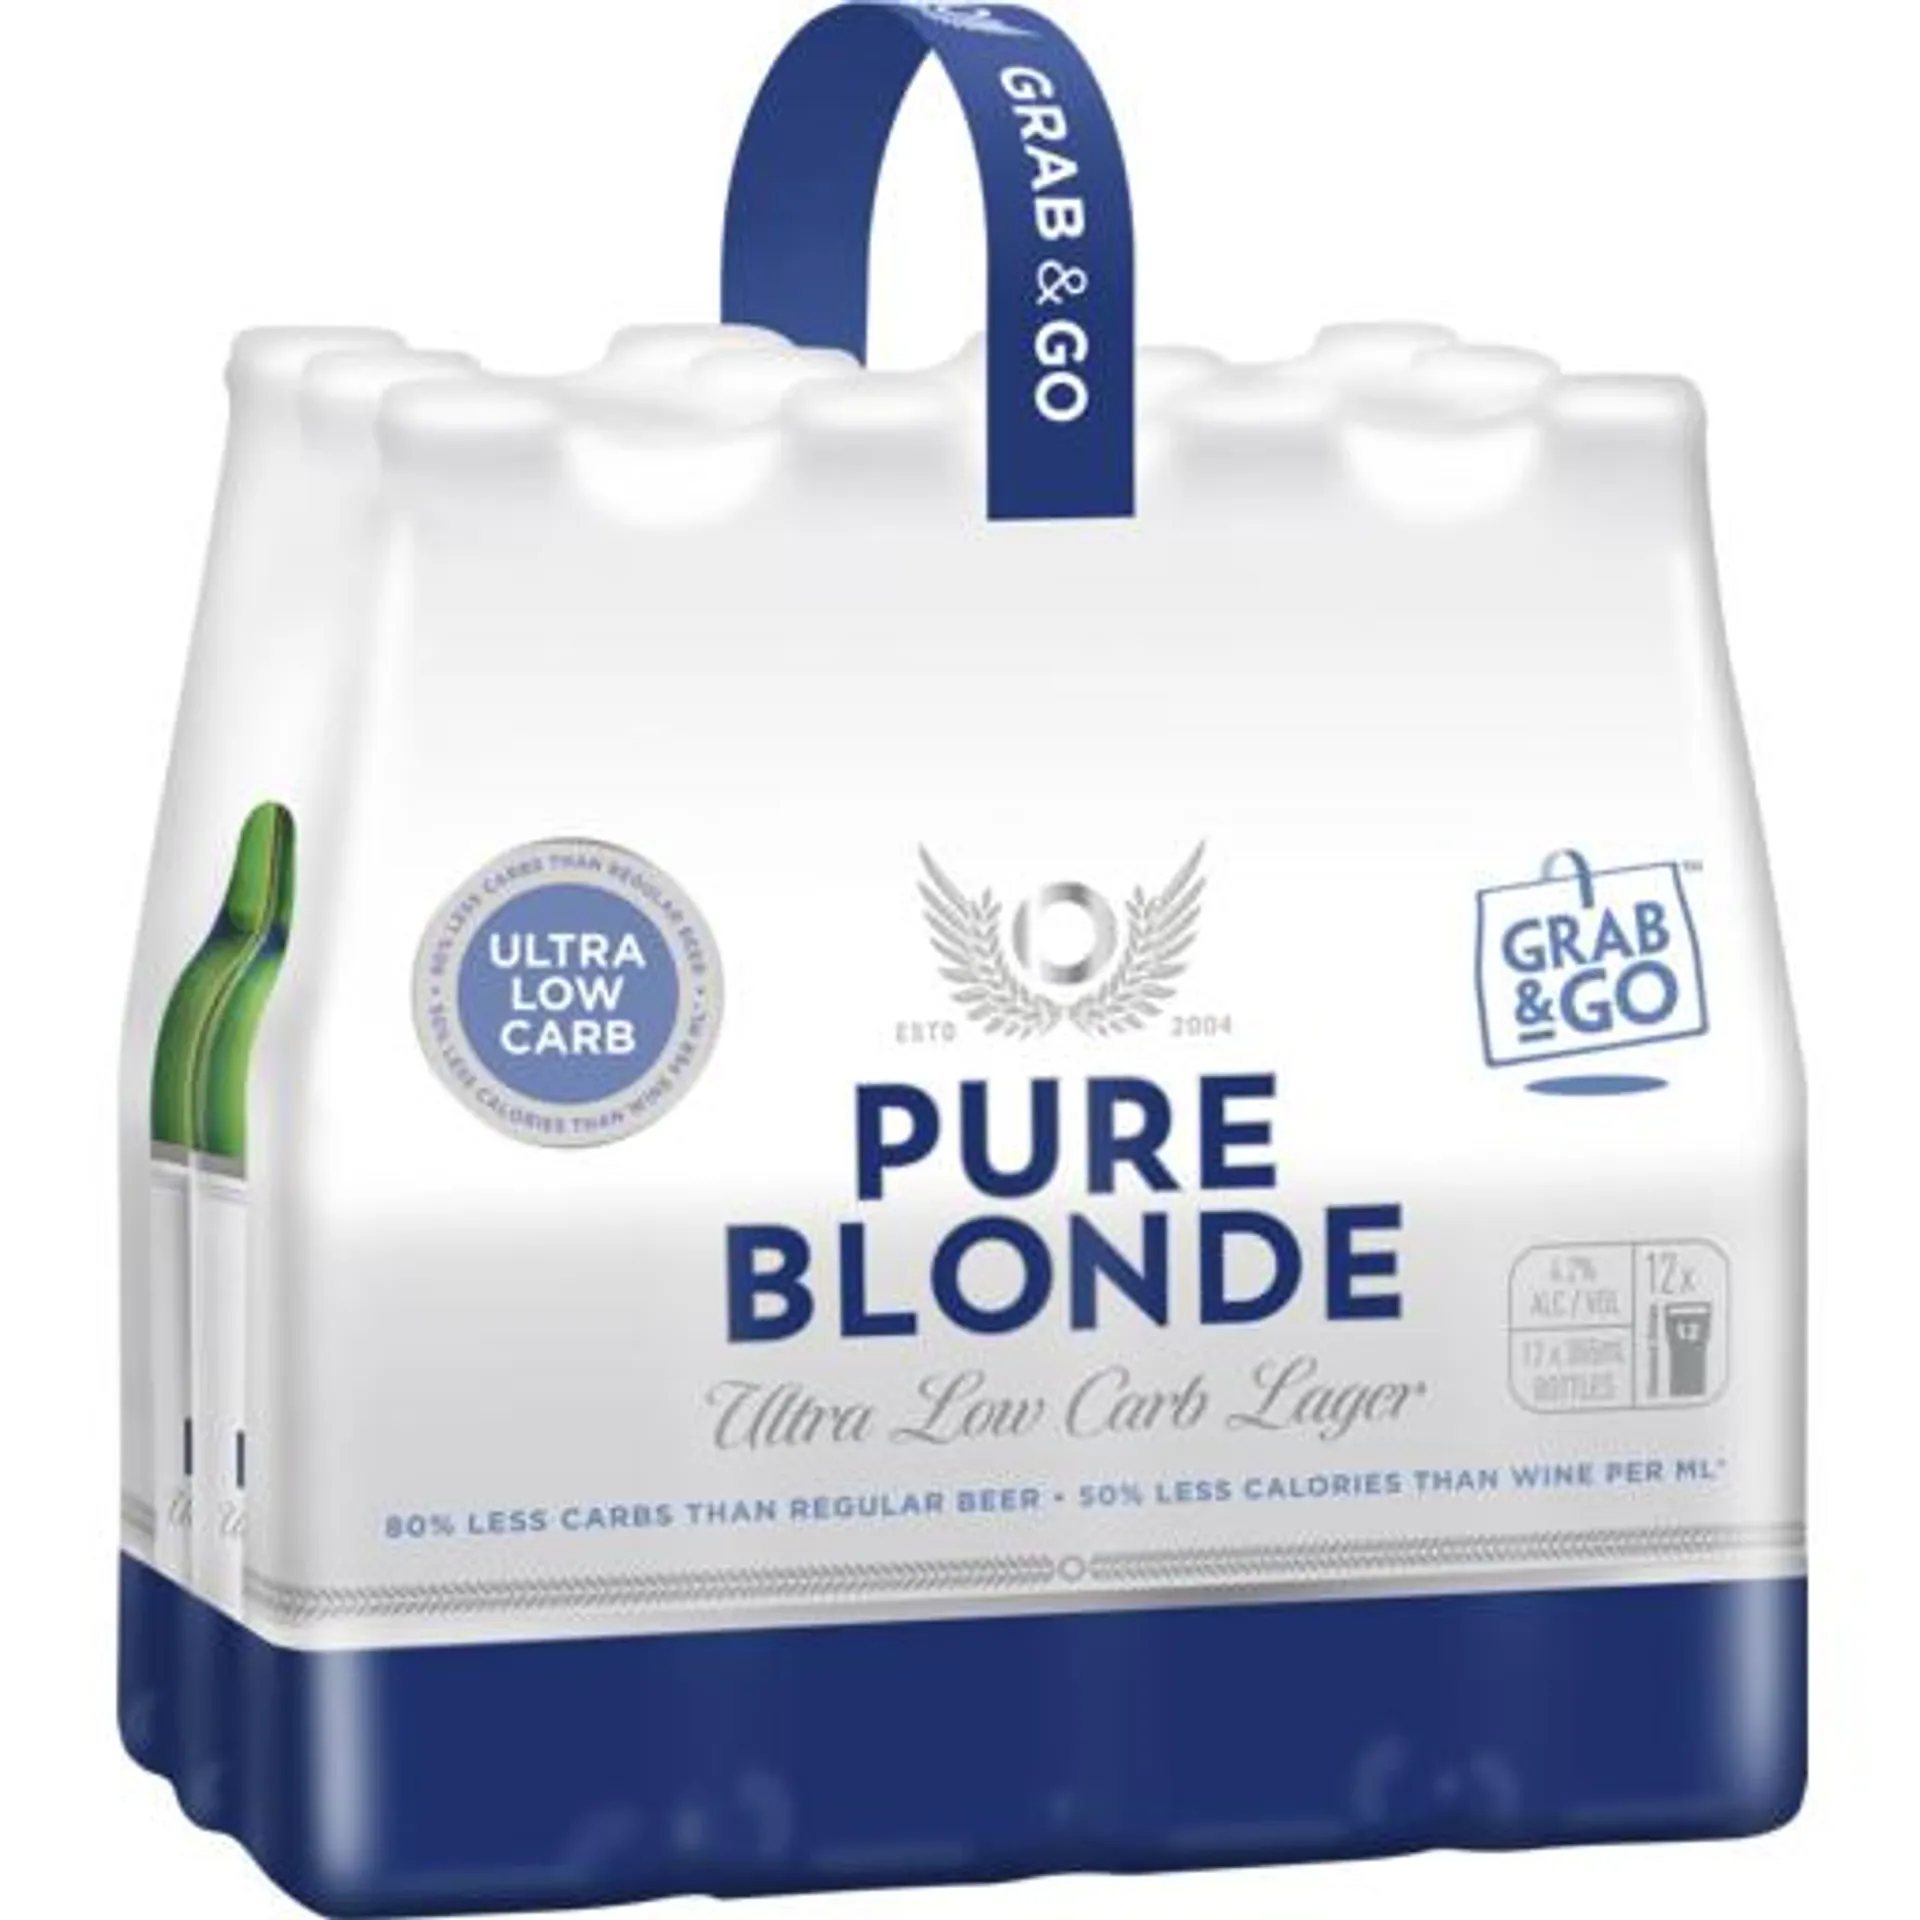 Pure Blonde 12 x 355ml Bottles